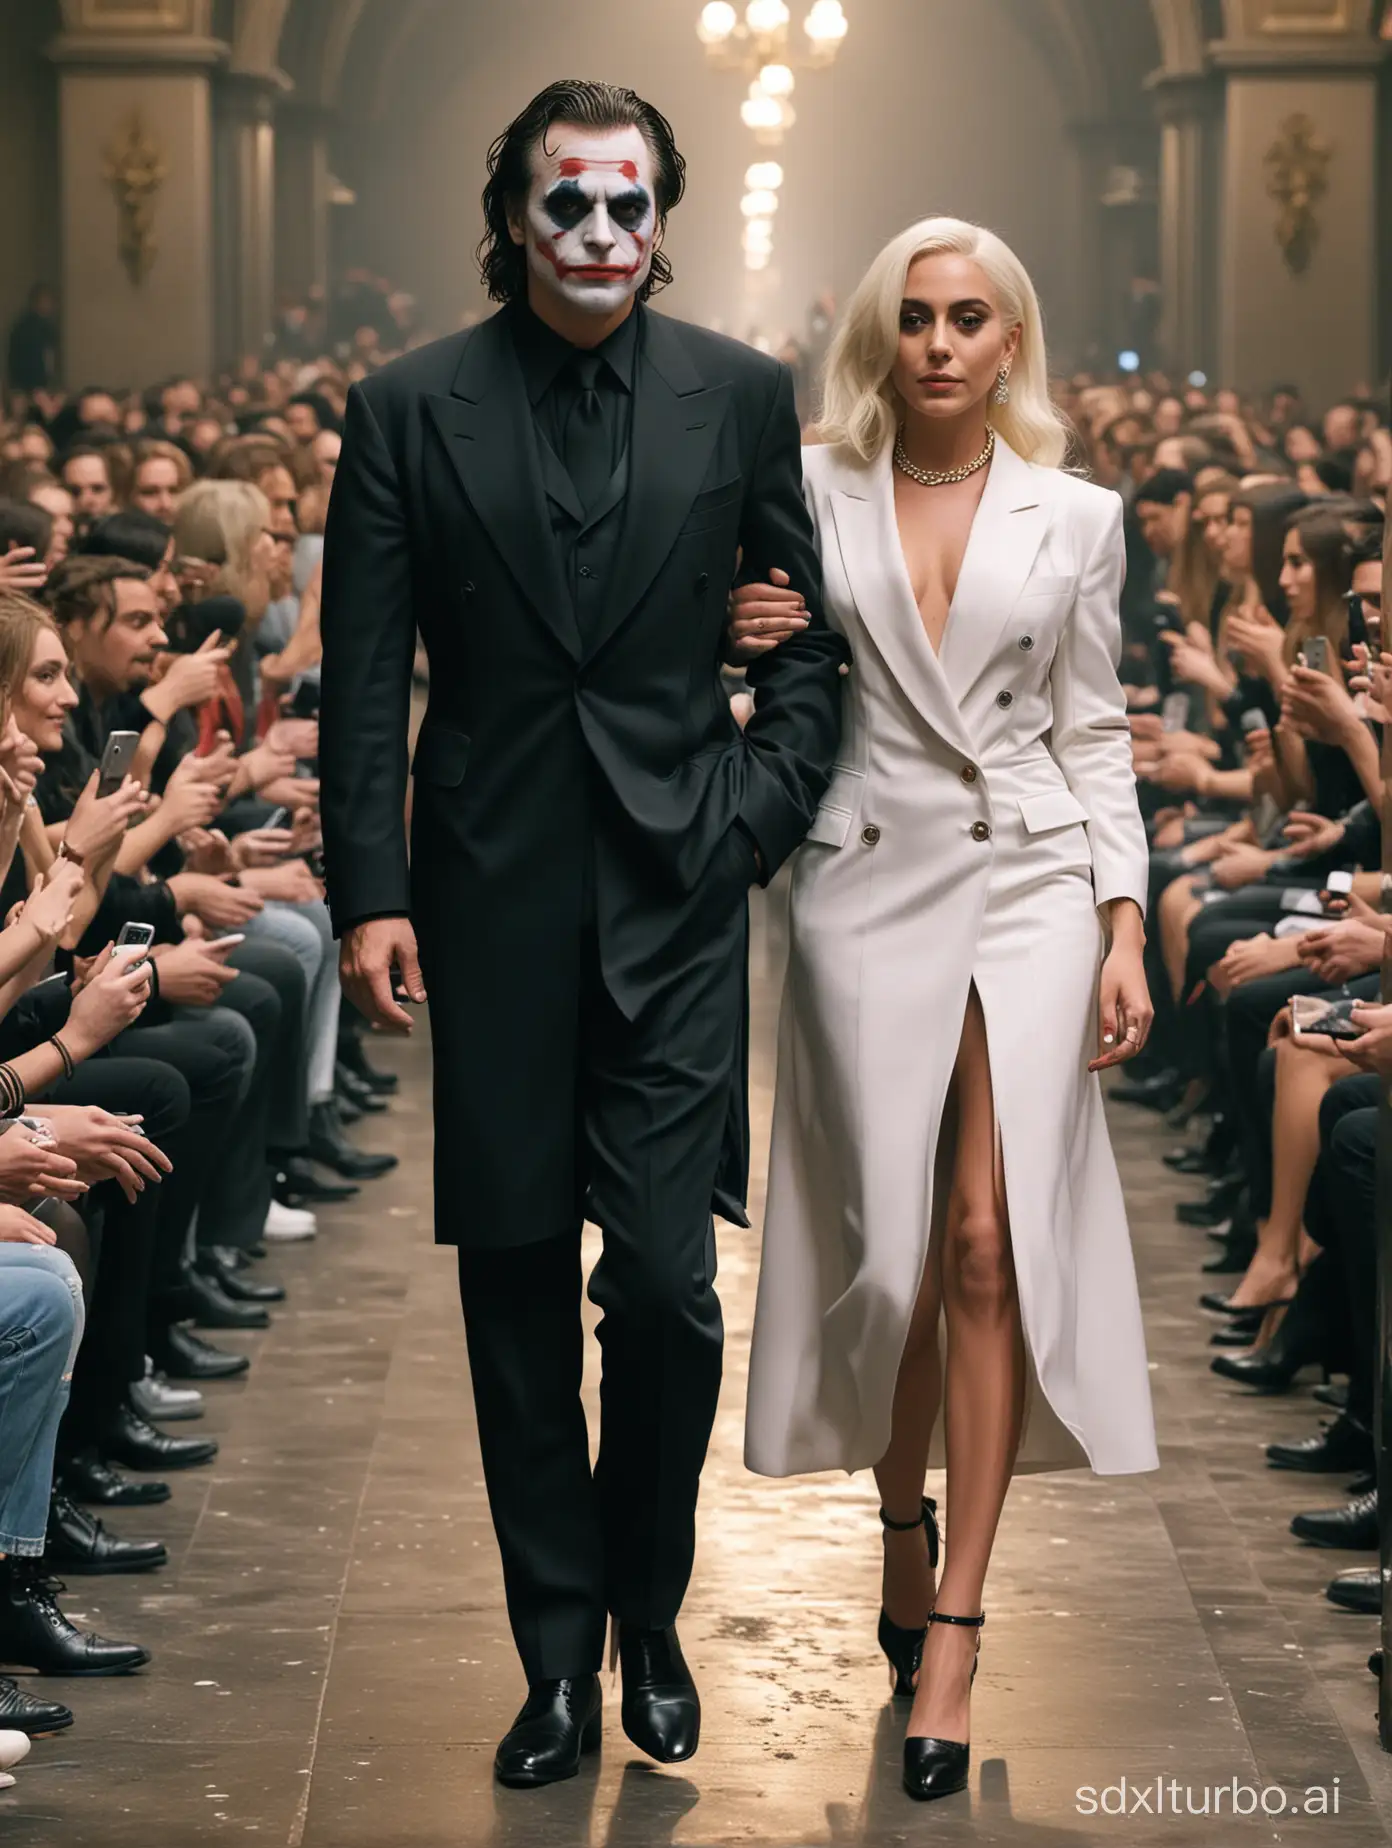 In Paris Collection, Joker and Lady Gaga walk the runway, realistic Joaquin Phoenix, realistic Lady Gaga, walking, (full body shot), (audience on both sides), Paris Collection runway, colorful, ultra-delicate photos, Paris Collection runway, (eccentric fashion), outrageous fashion, flashy fashion, Paris Collection image